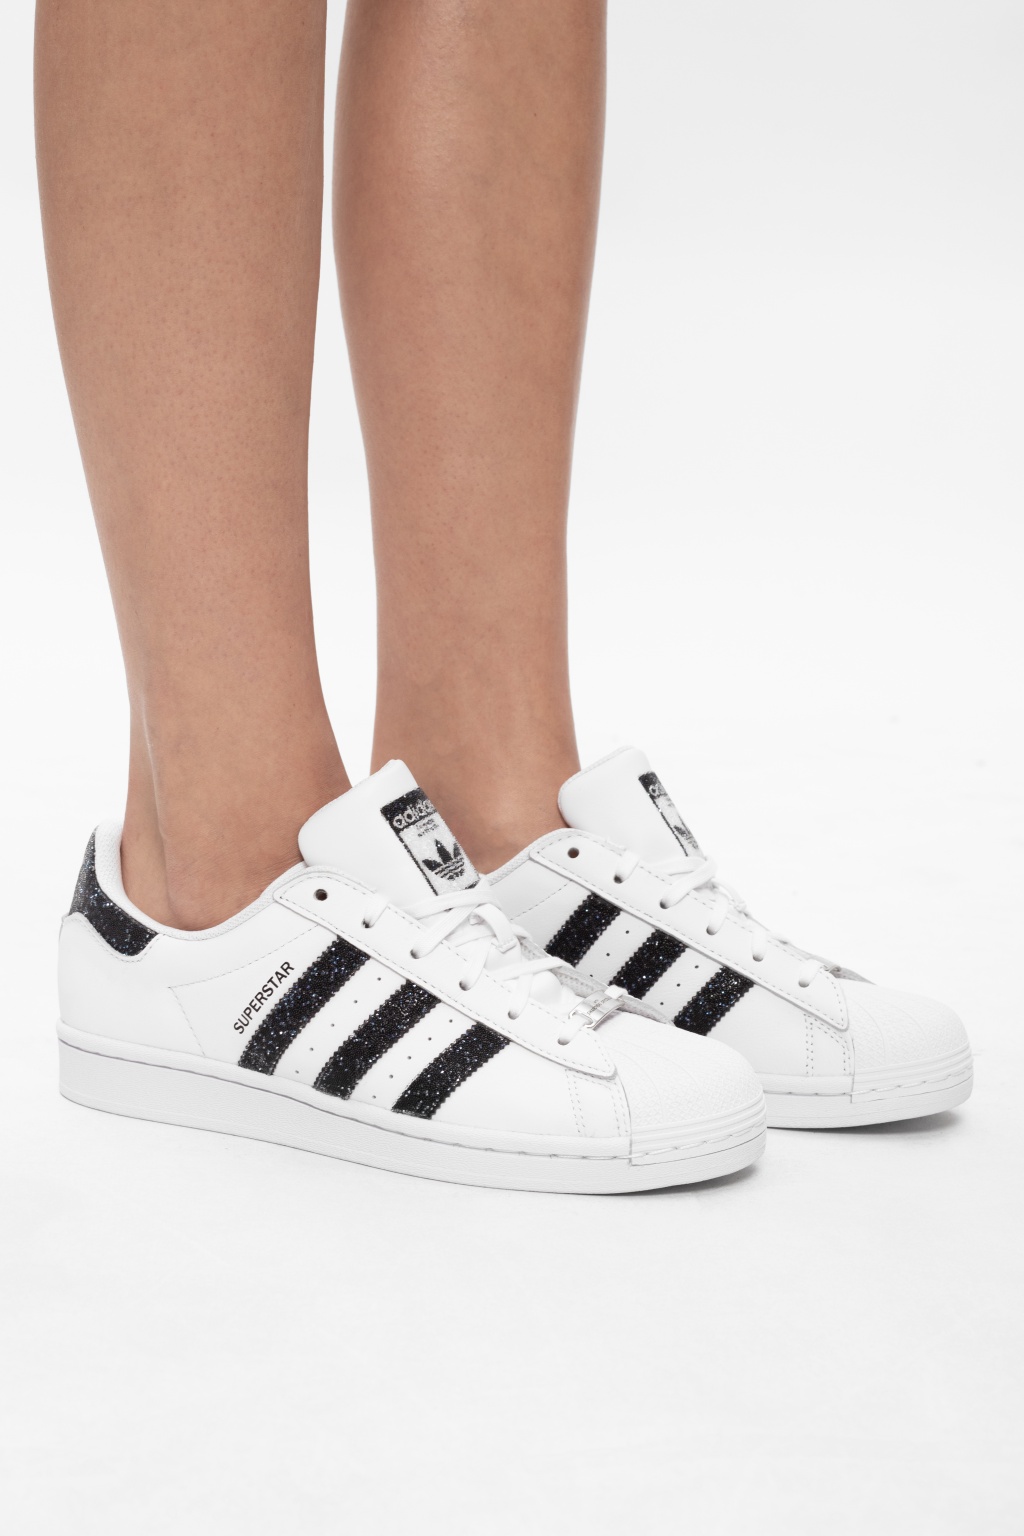 White 'Superstar' sneakers ADIDAS Originals - Vitkac Germany